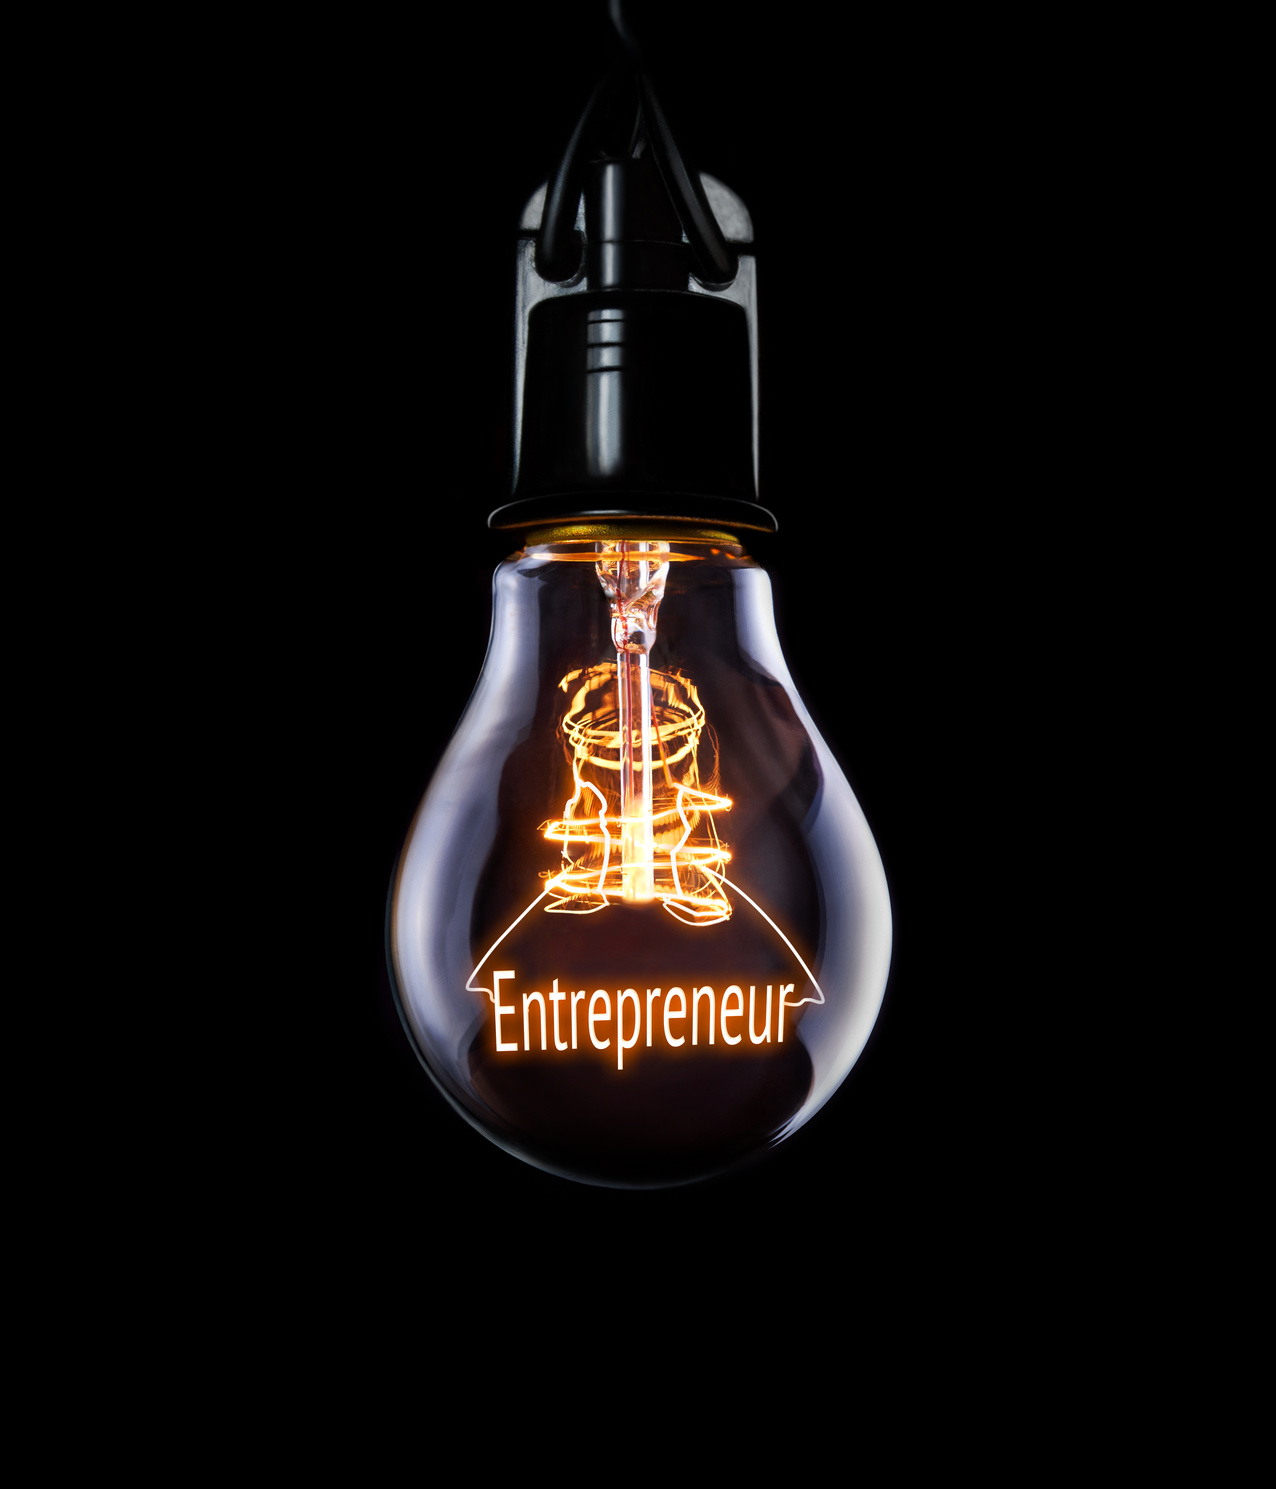 Entrepreneur Life: Competing Brands